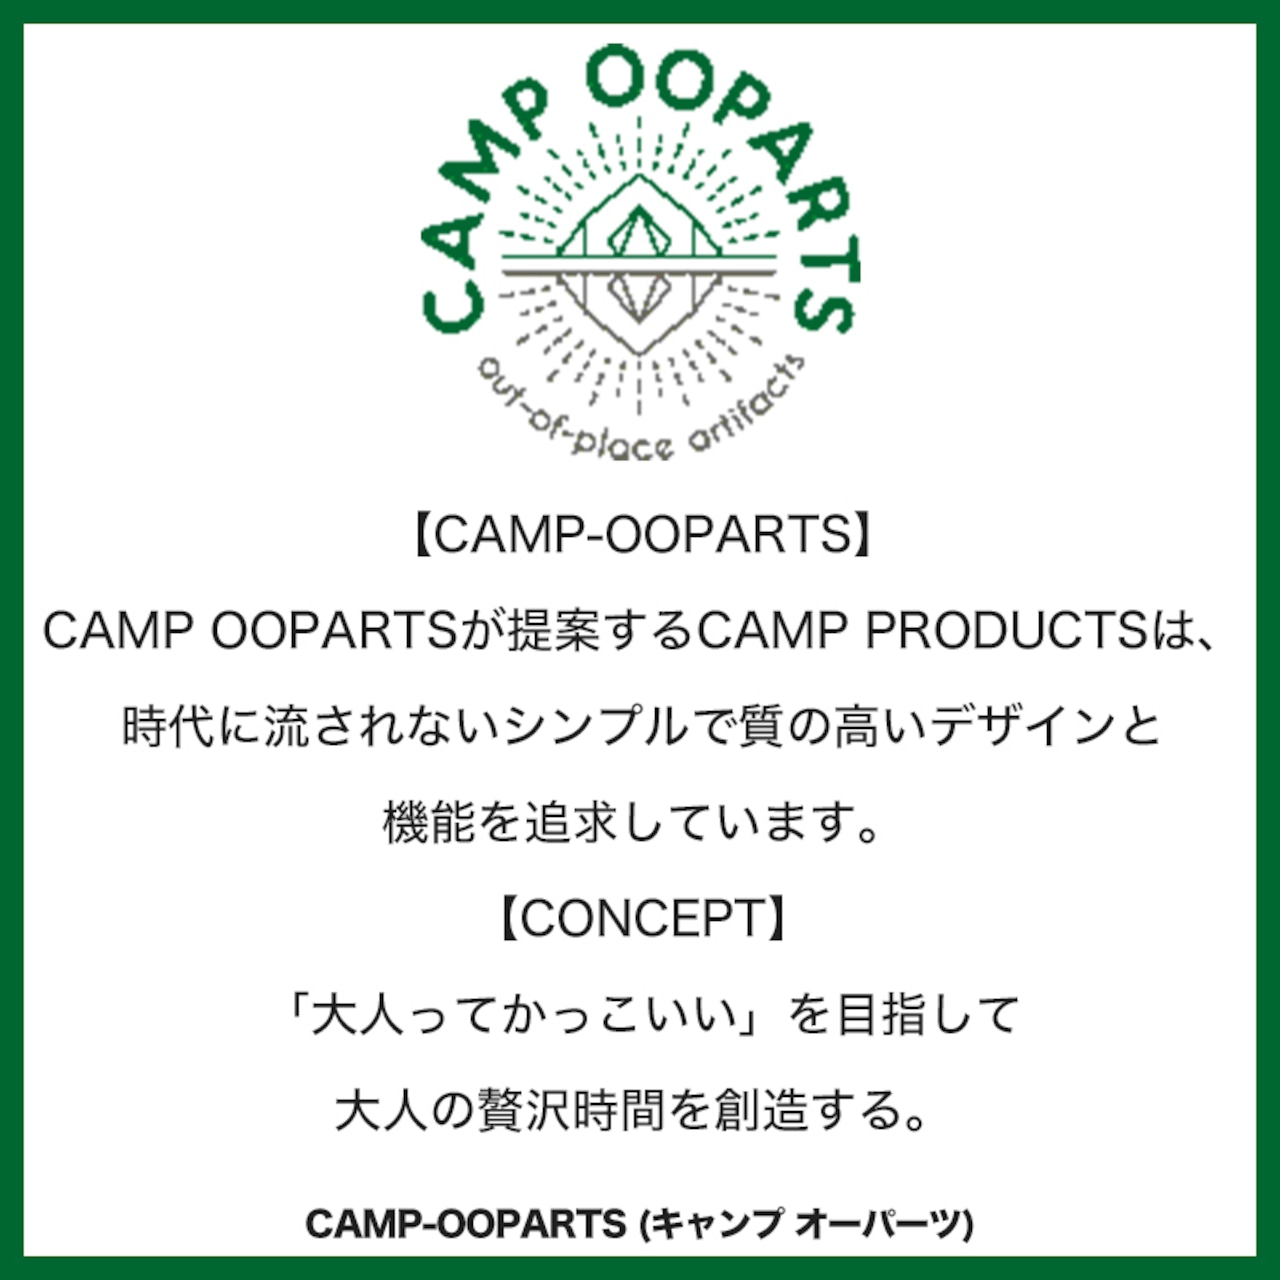 CAMPOOPARTS キャンプオーパーツ Dripper stand “Tamo” single type 珈琲ドリッパースタンド「タモ」1連タイプ コーヒードリップスタンド